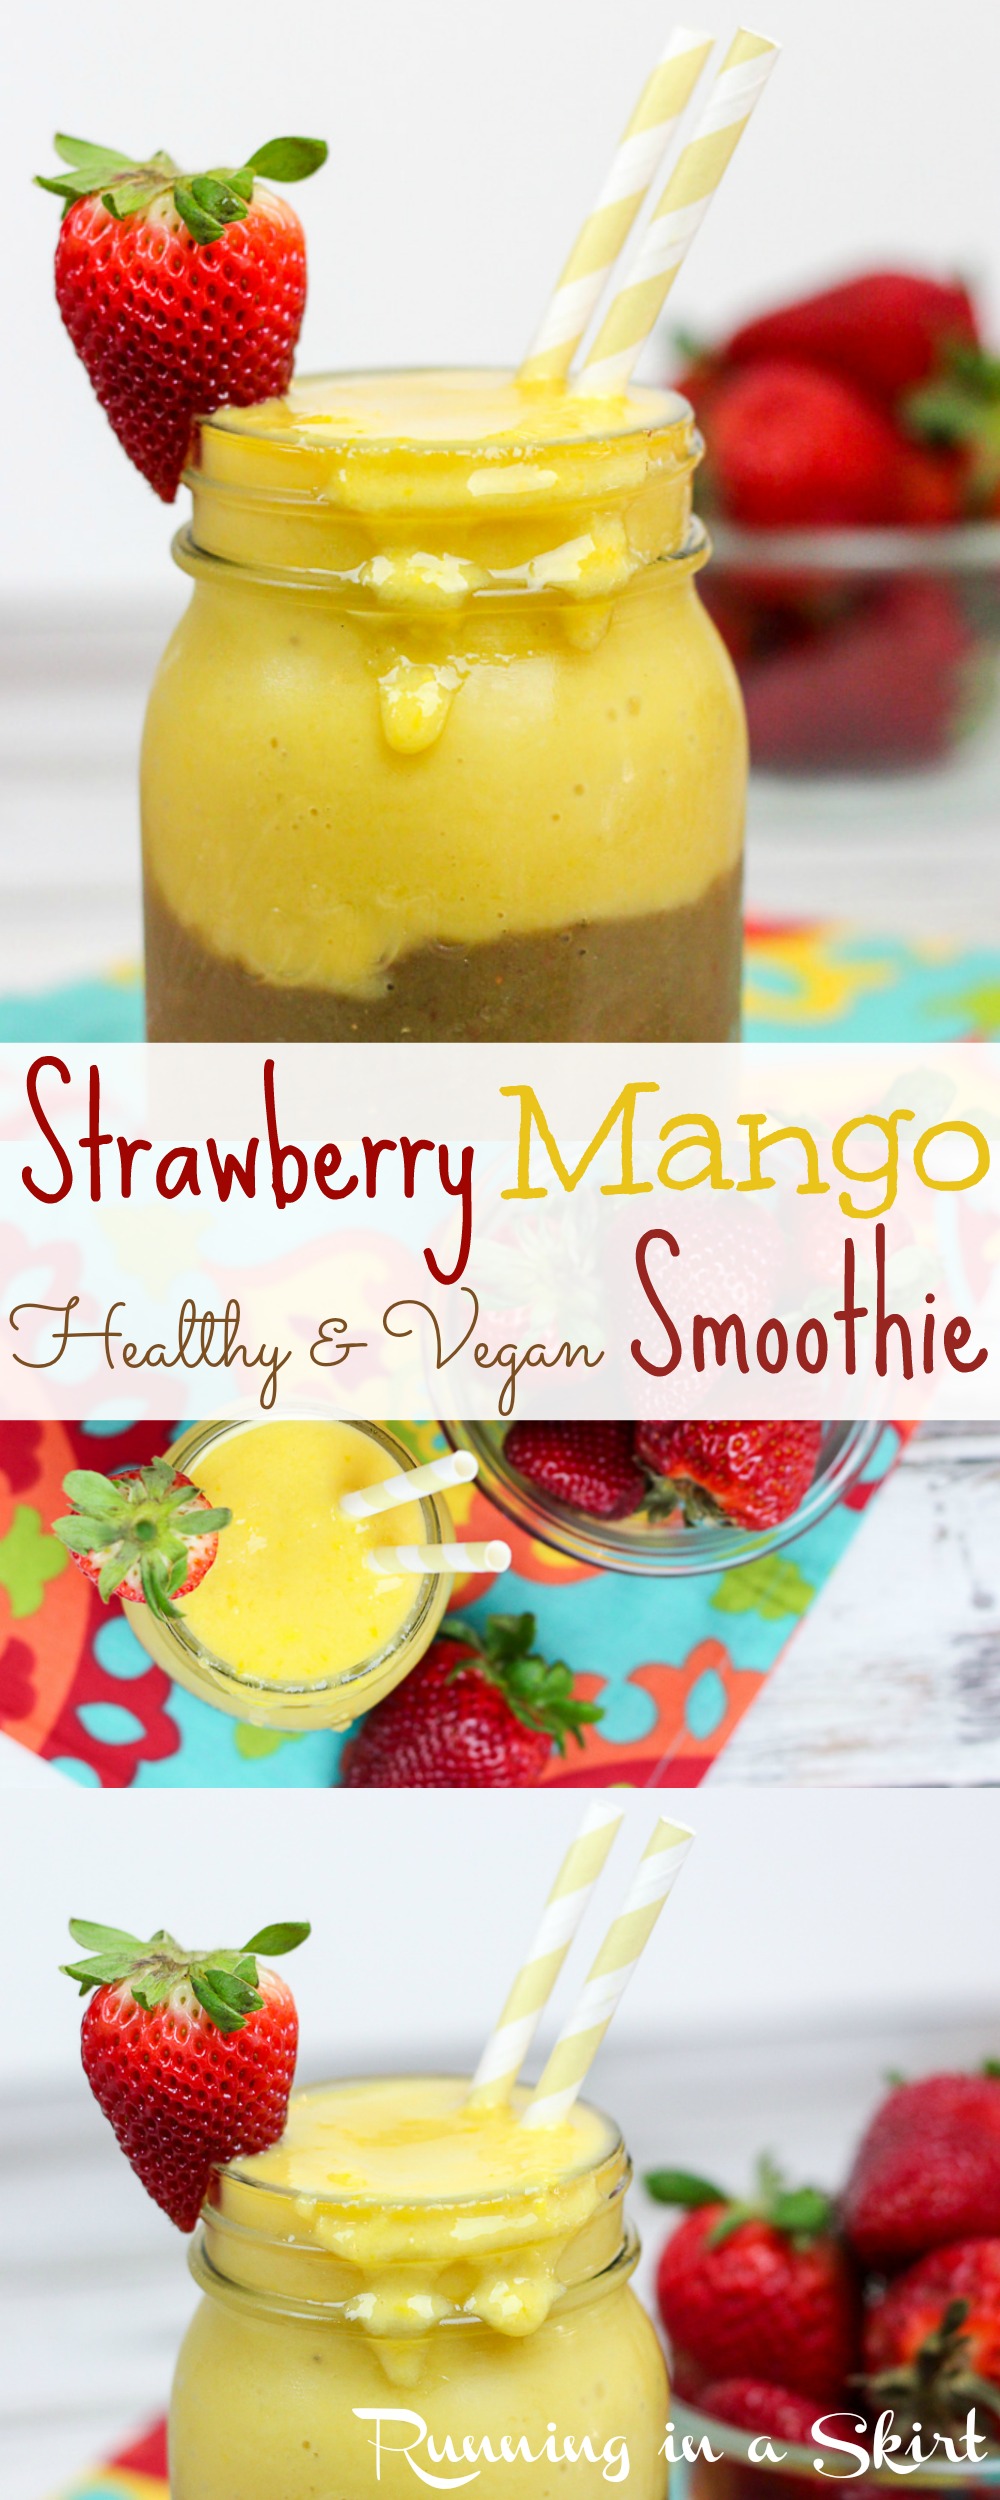 Healthy Strawberry and Mango Smoothie Recipe